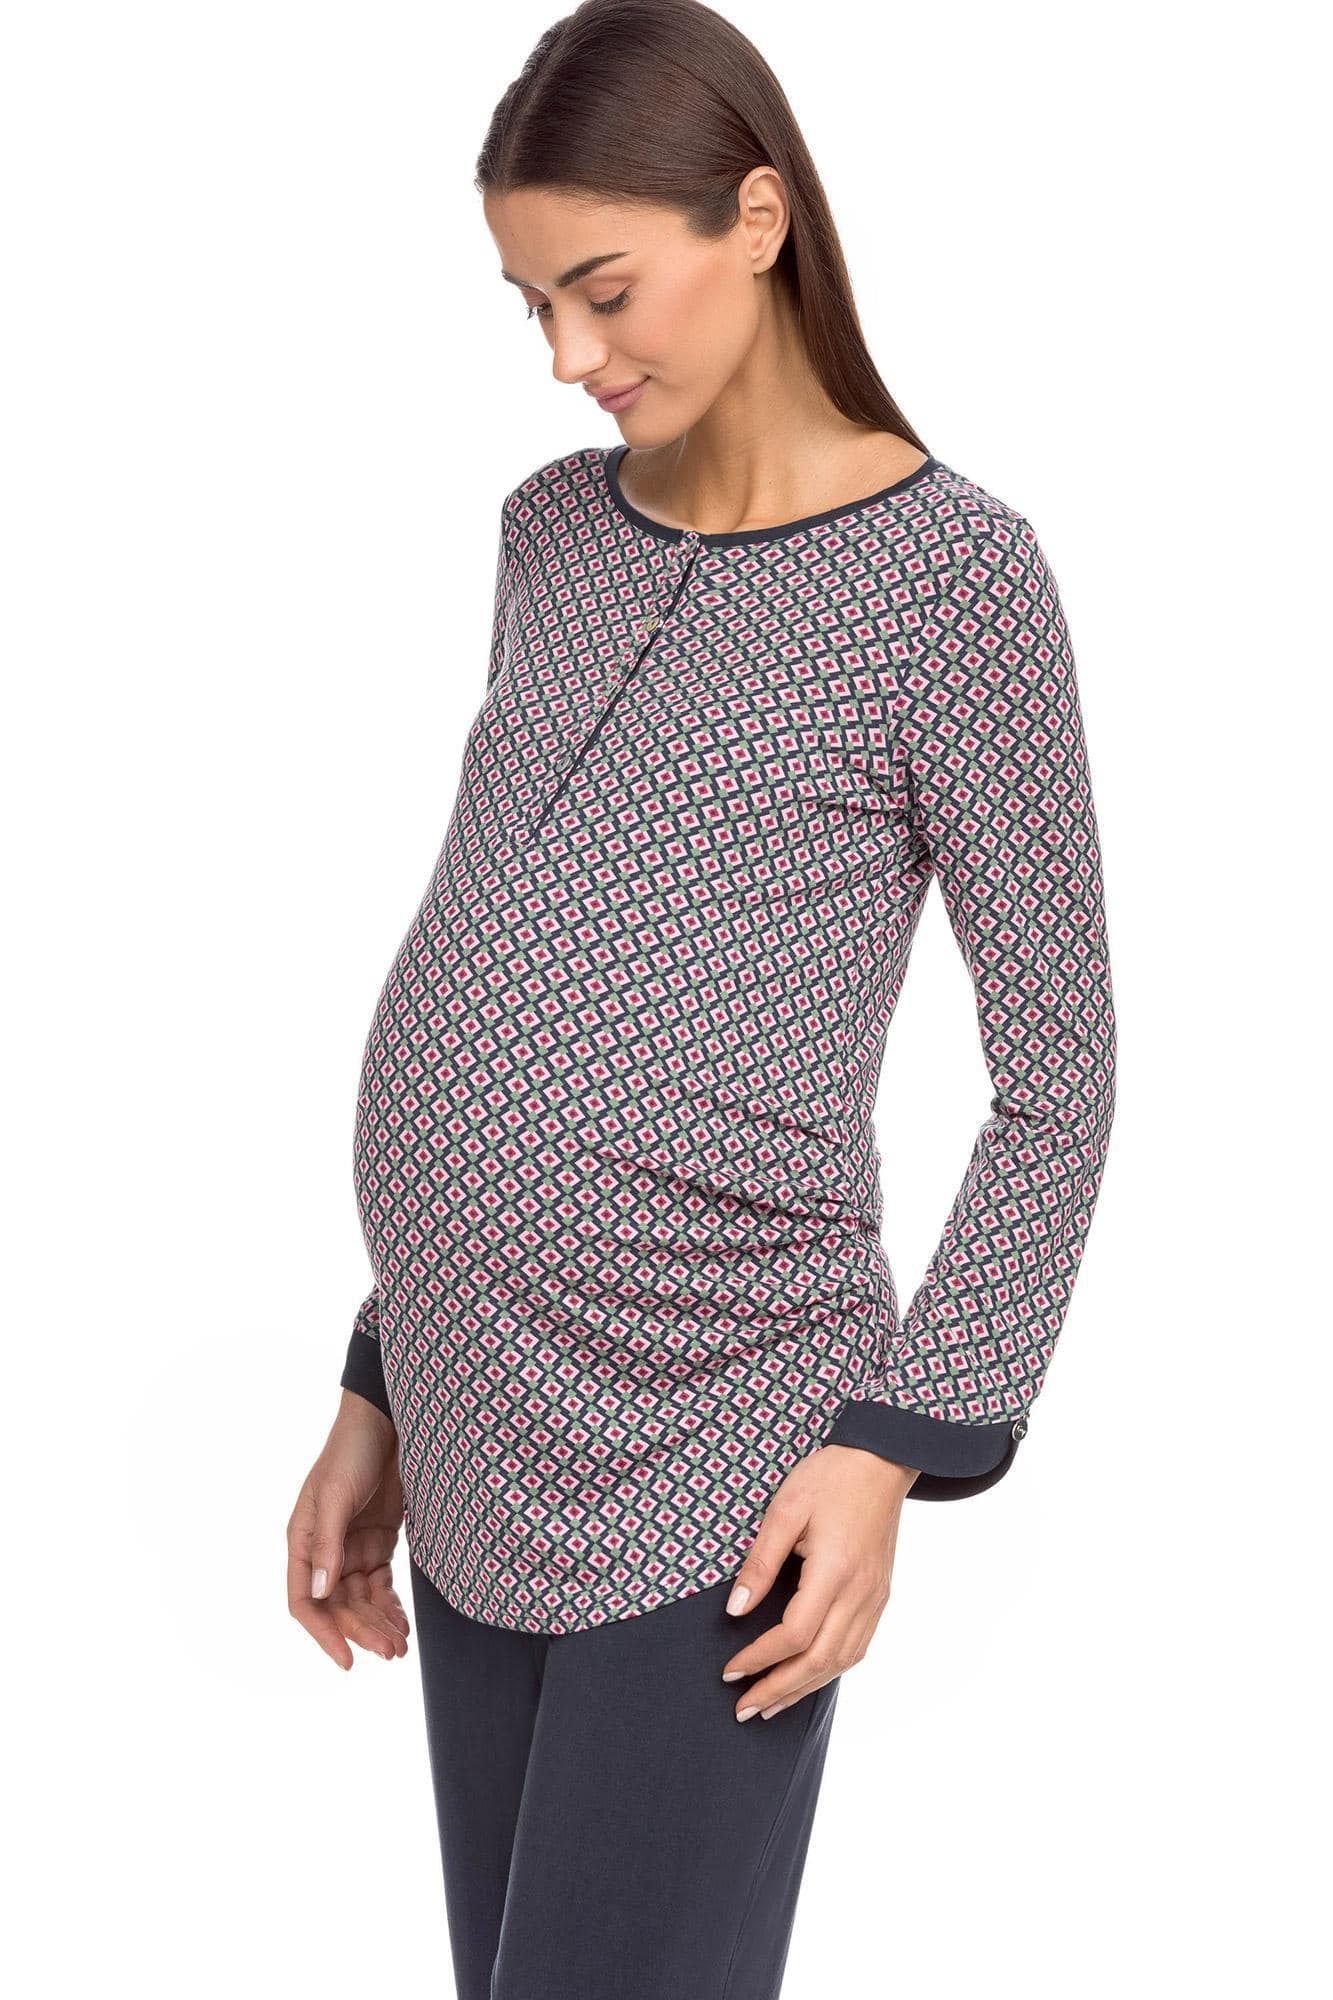 Women’s Pyjamas for Maternity